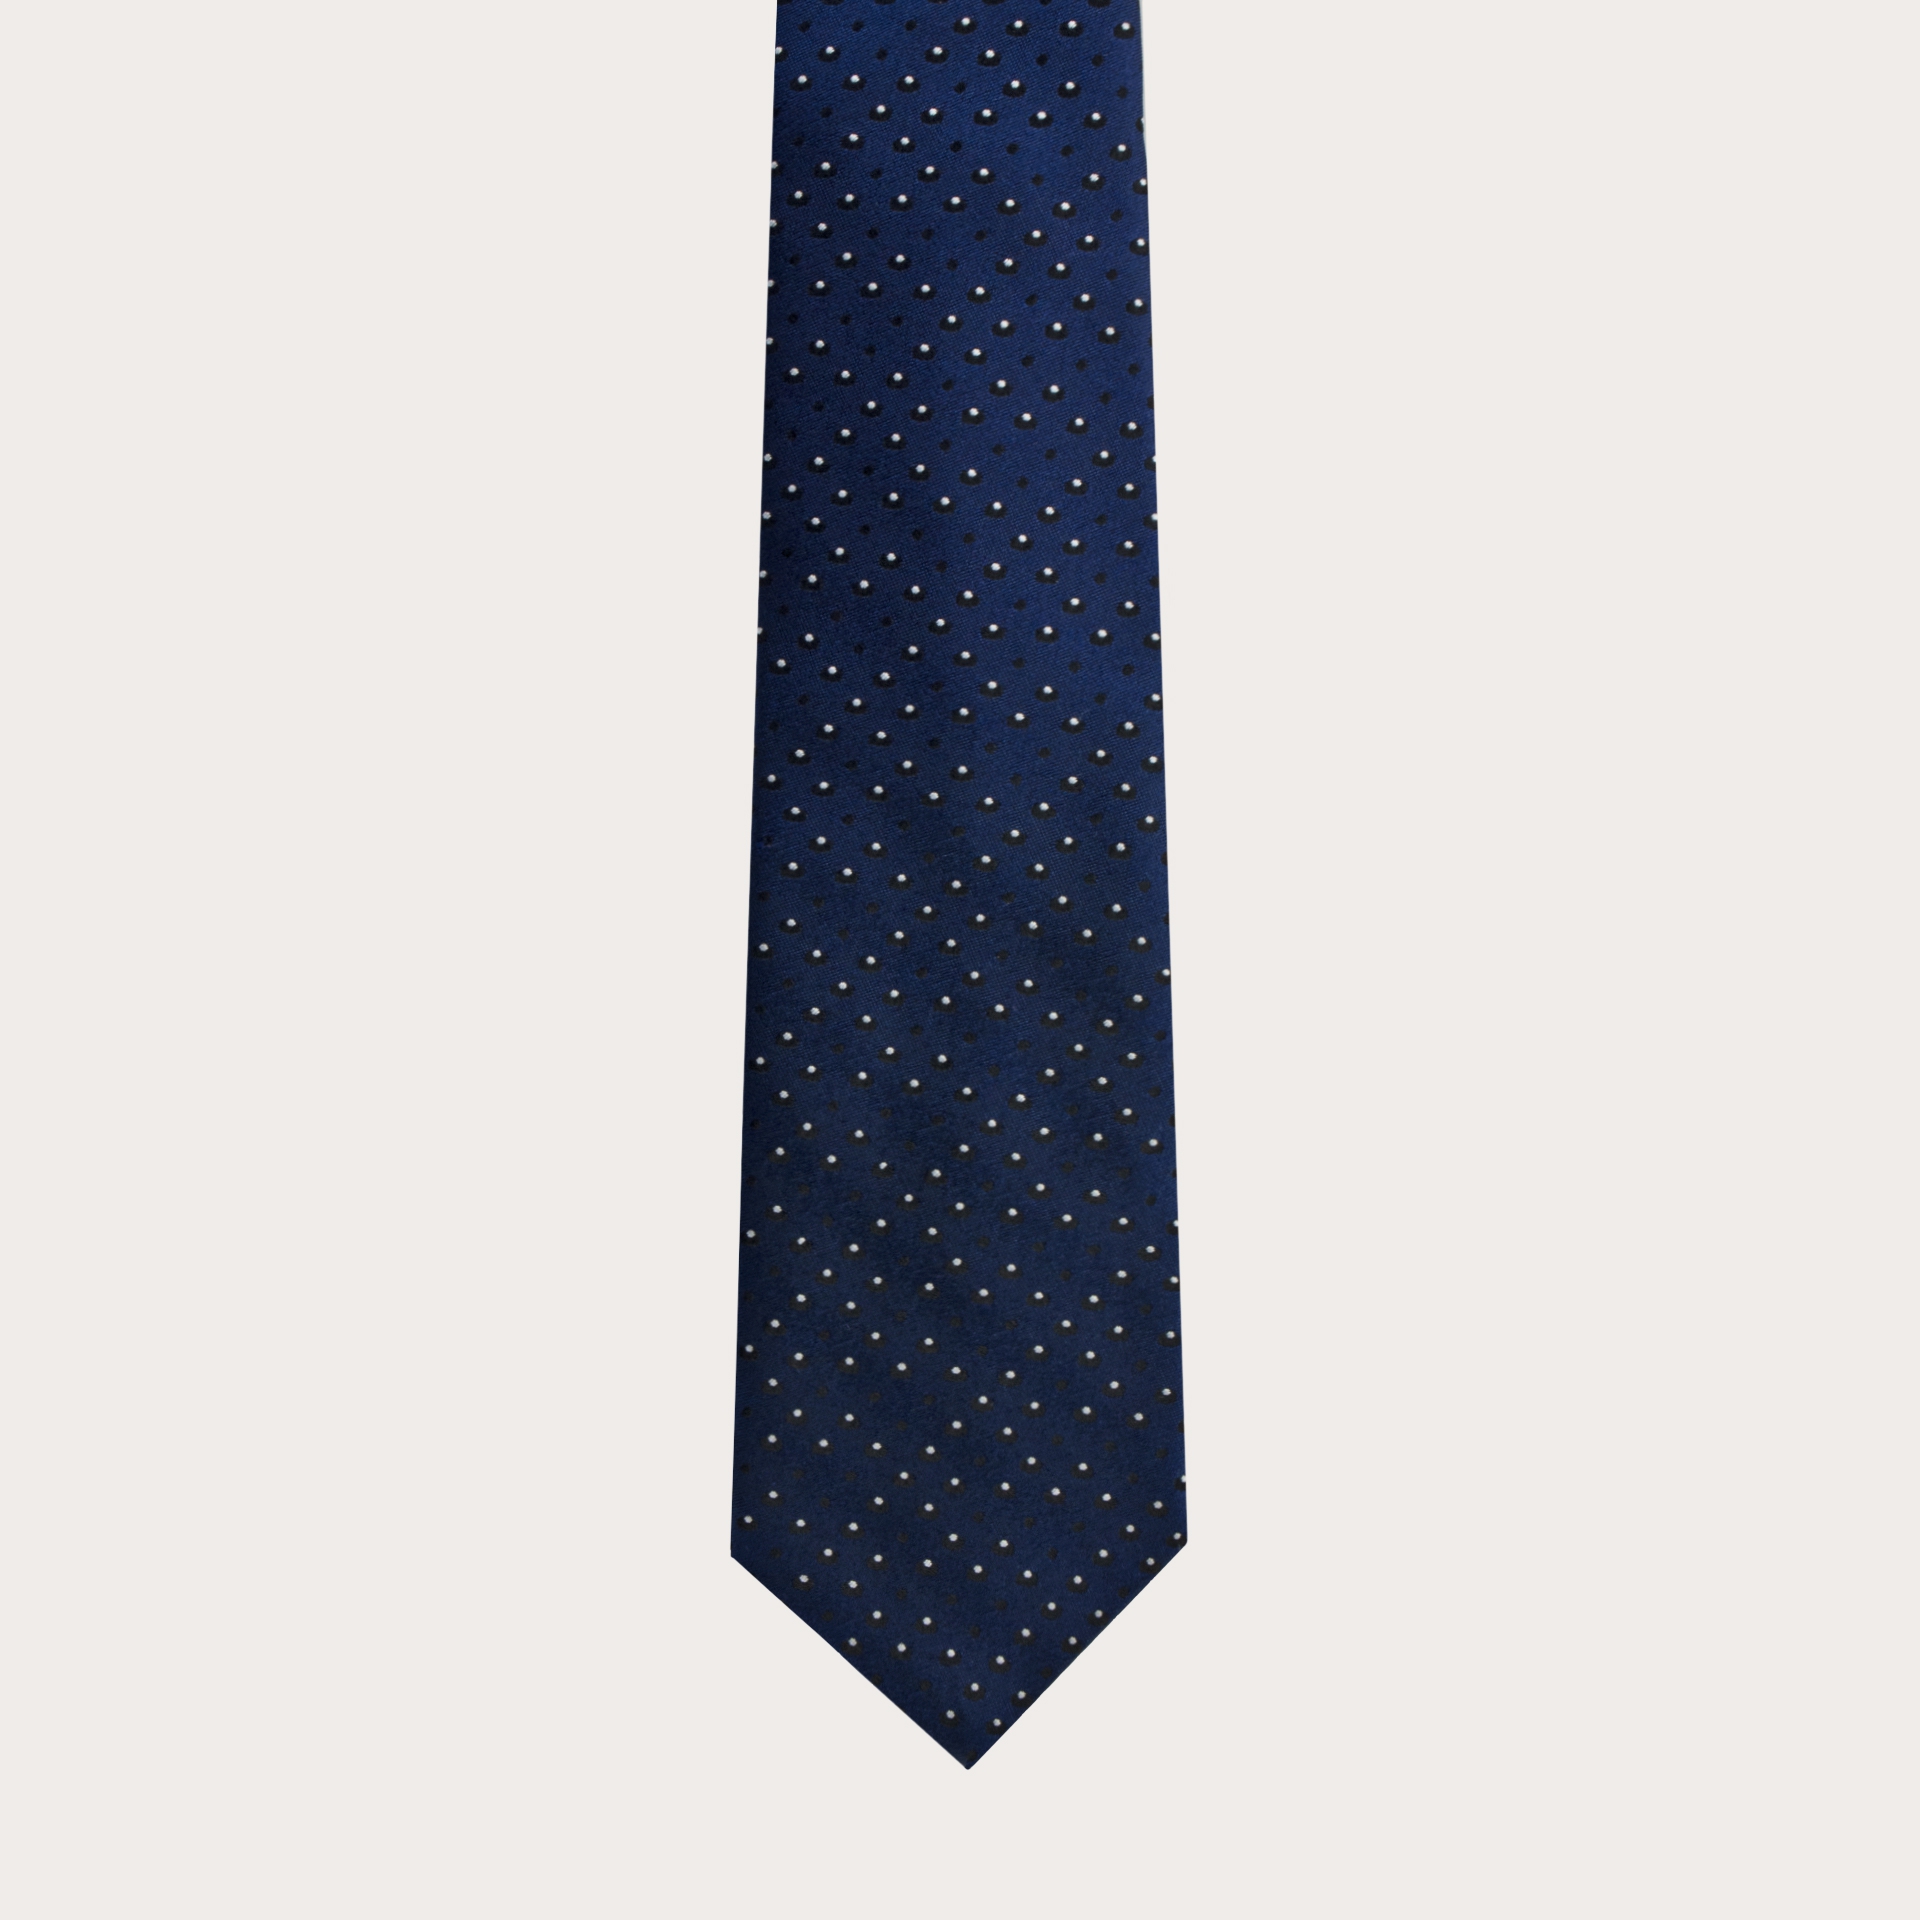 Cravatta blu faux puntaspillo in seta jacquard